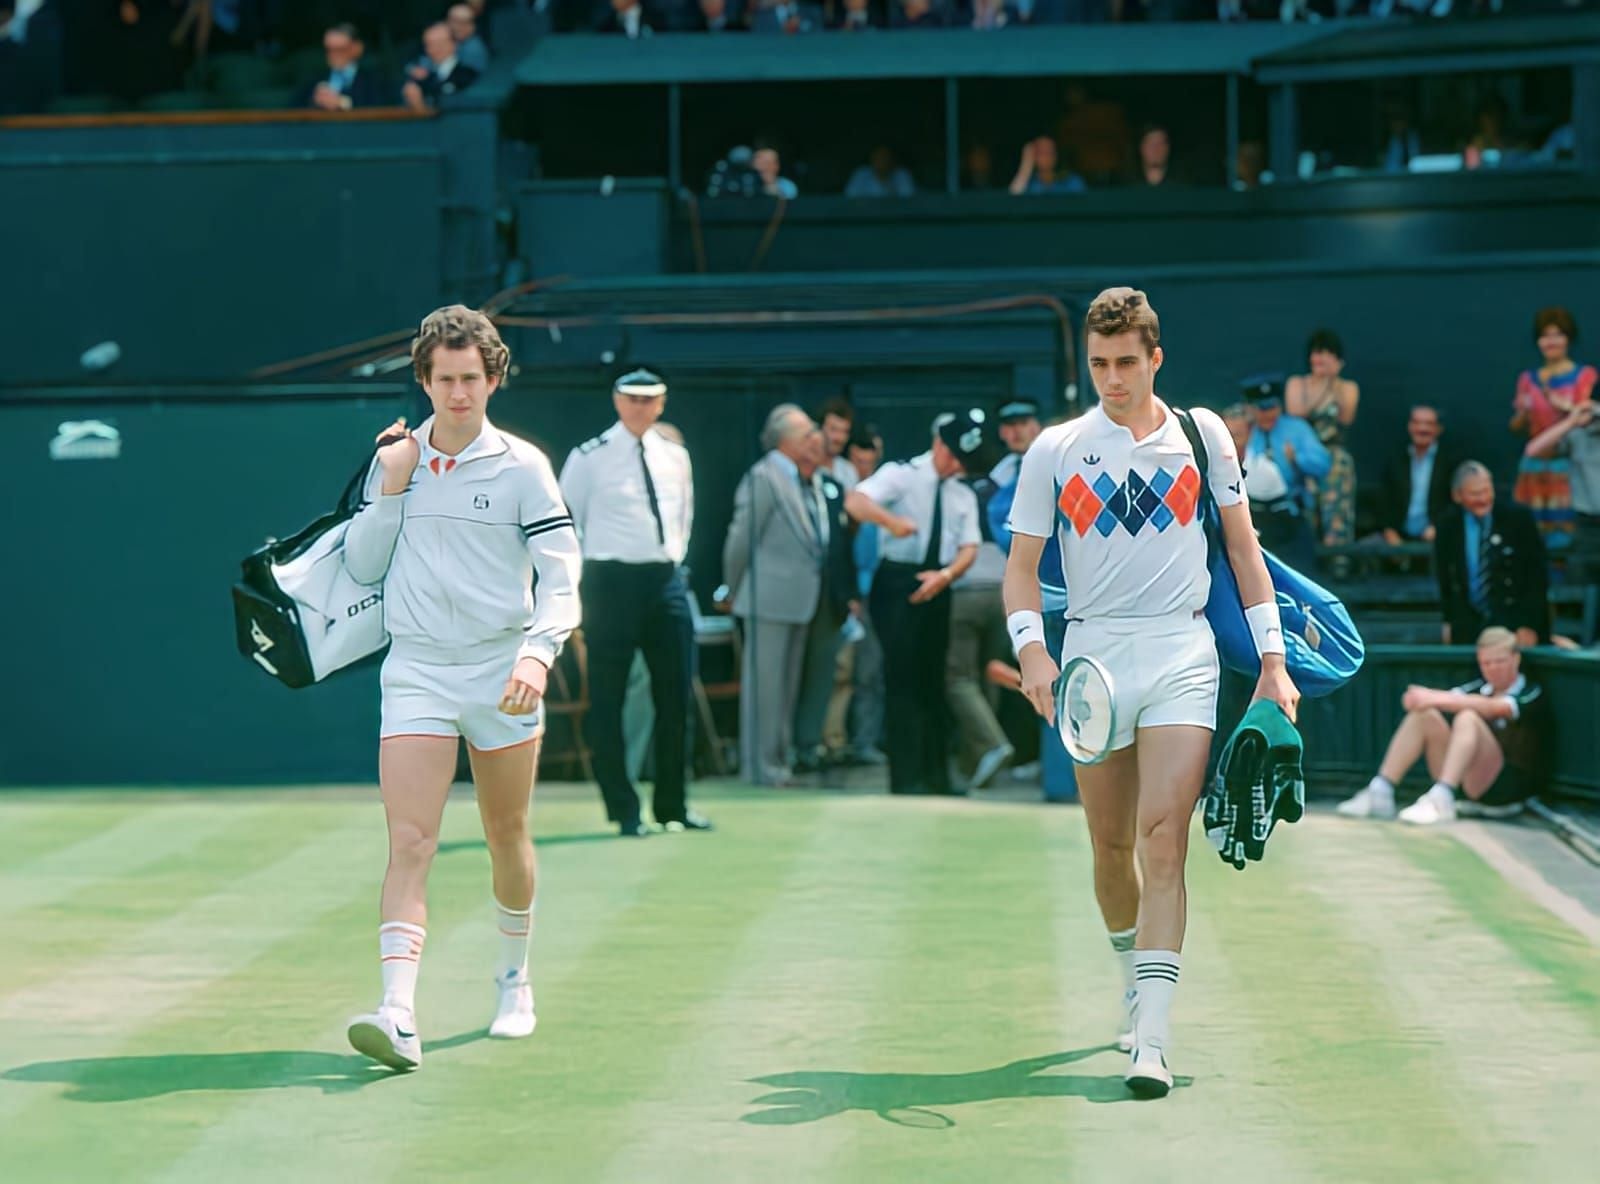 Ivan Lendl &amp; John McEnroe walking out for a match